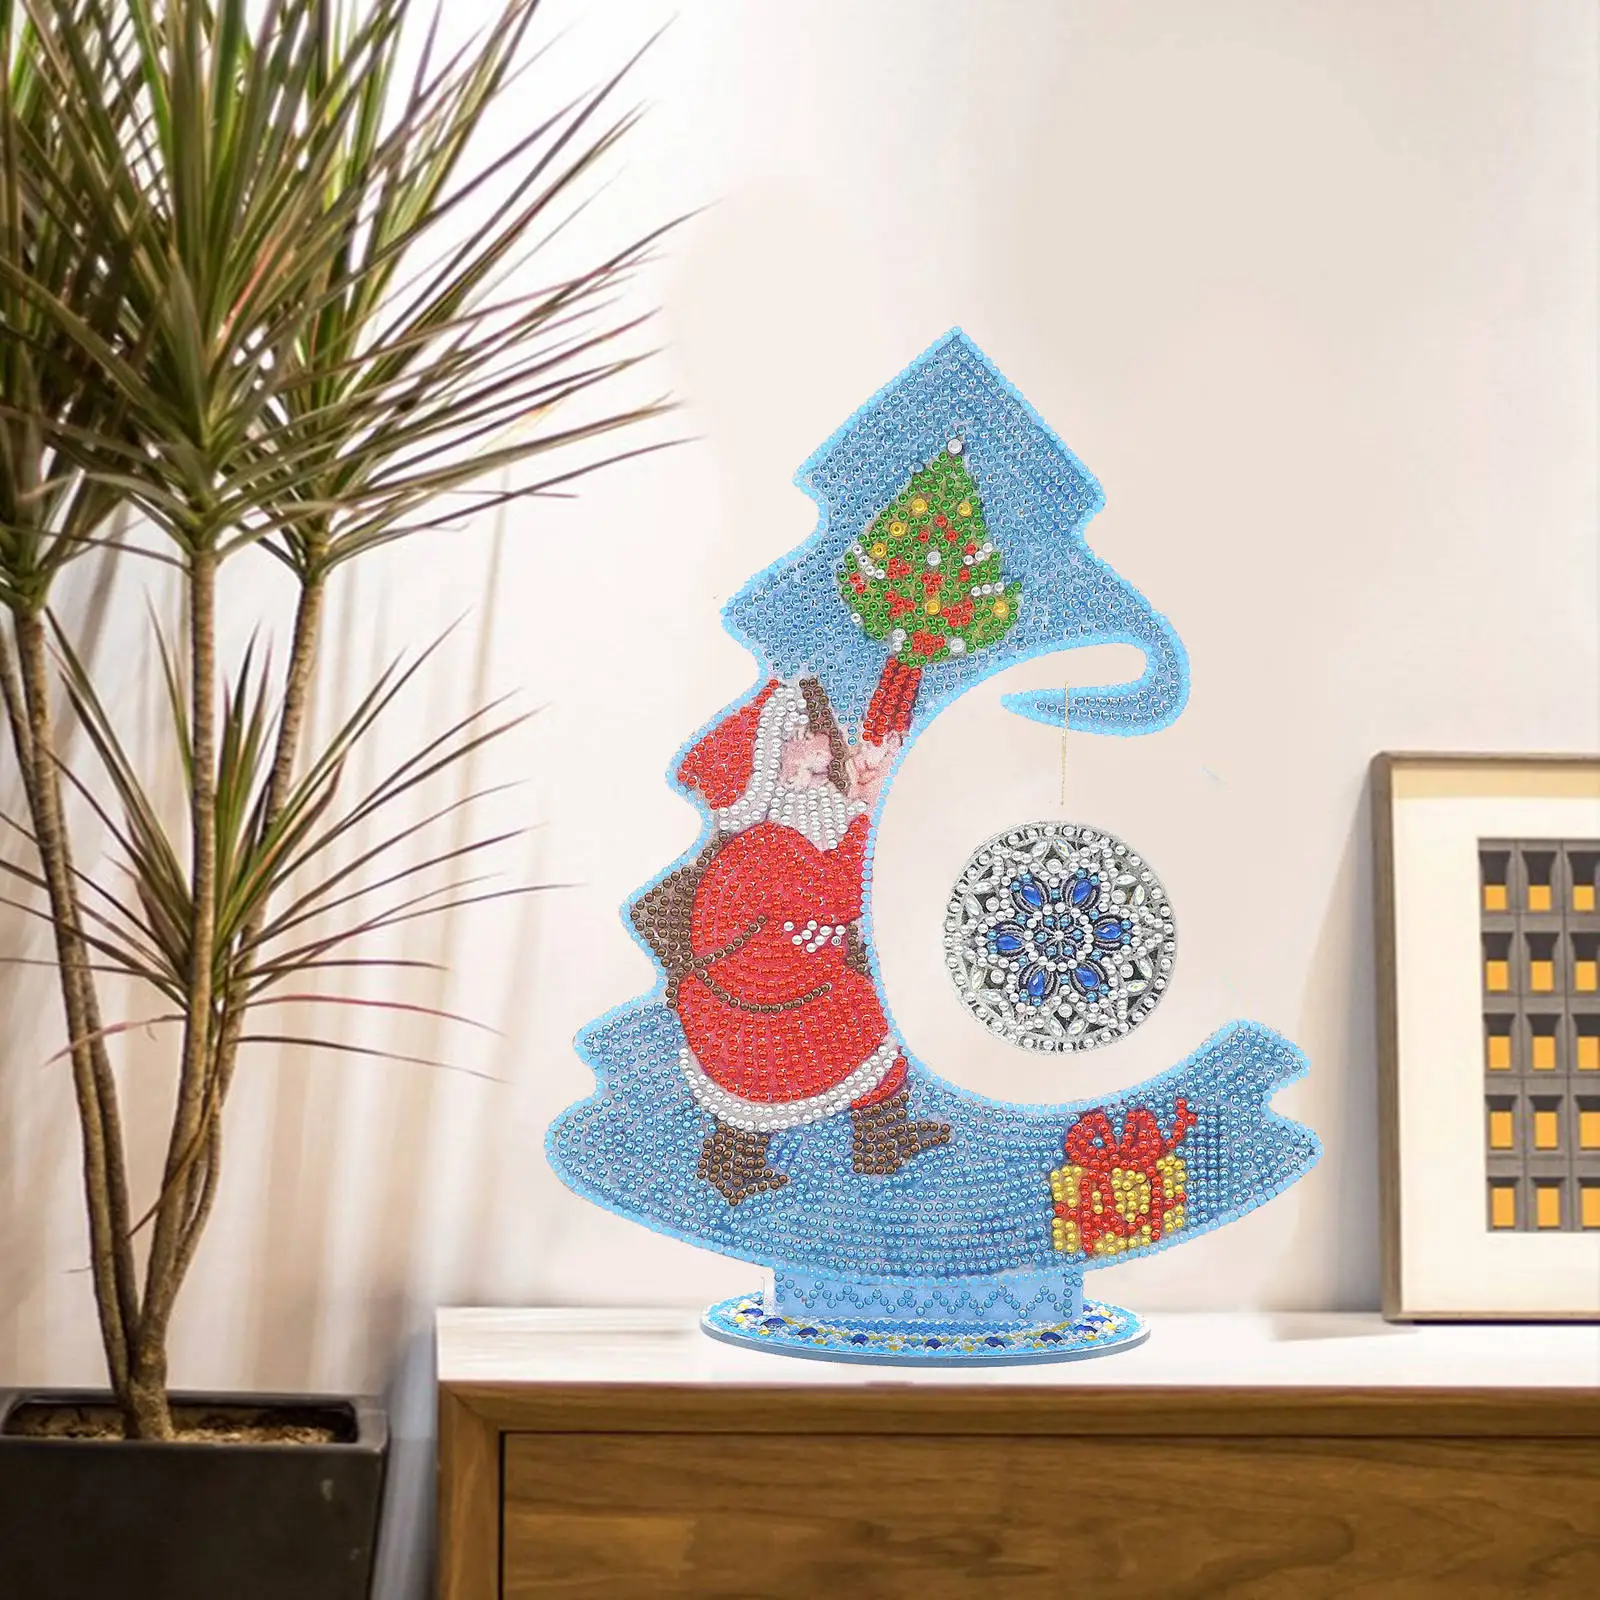 DIY Diamond Painting 5D Mosaic Crystal Christmas Tree Craft Diamond Painting Kit Home Ornaments Gifts New Year Home Decor